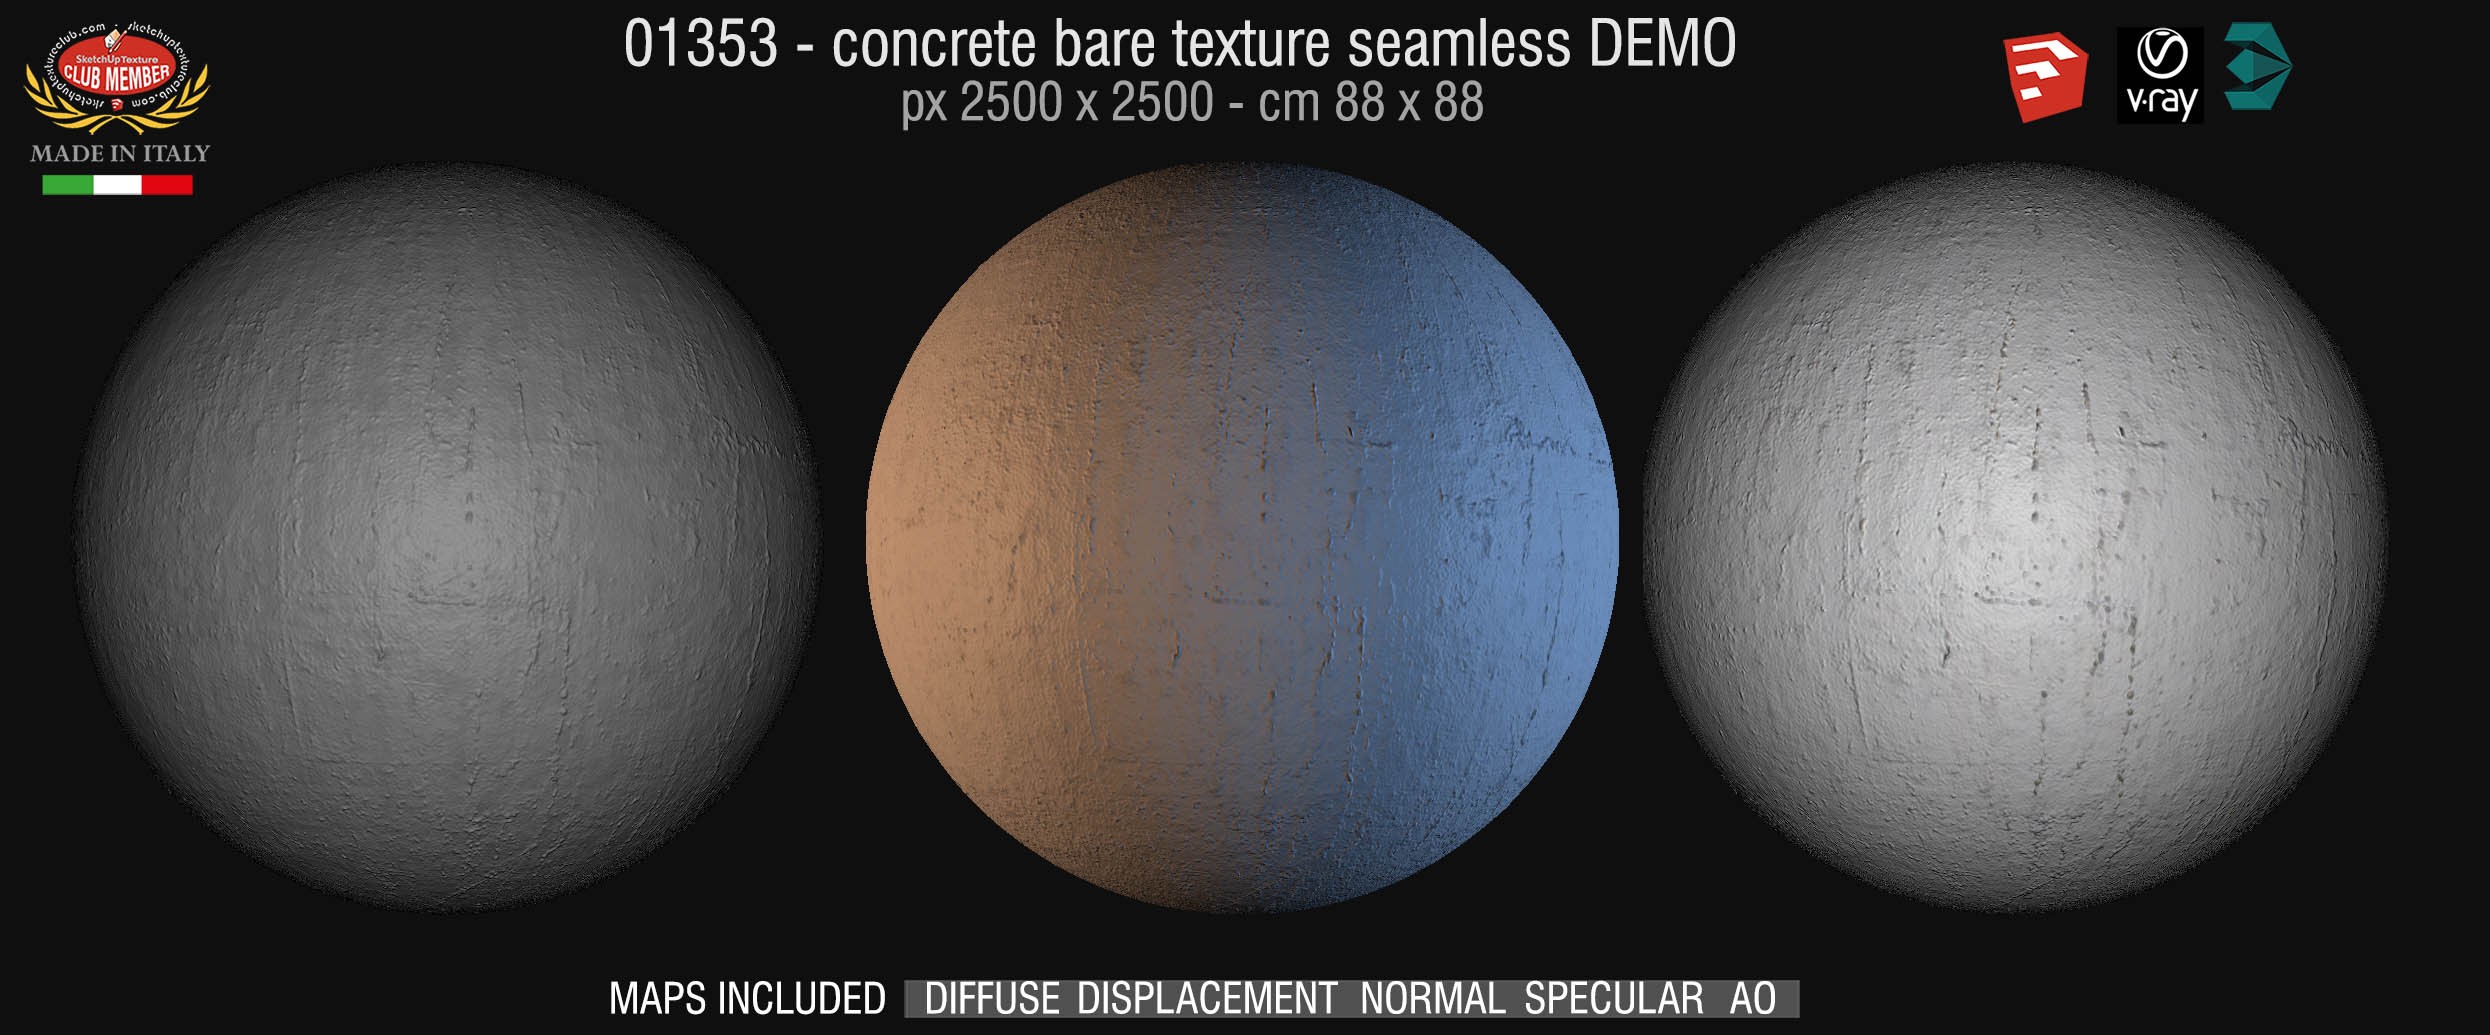 01353 HR Concrete bare clean texture seamless + maps DEMO